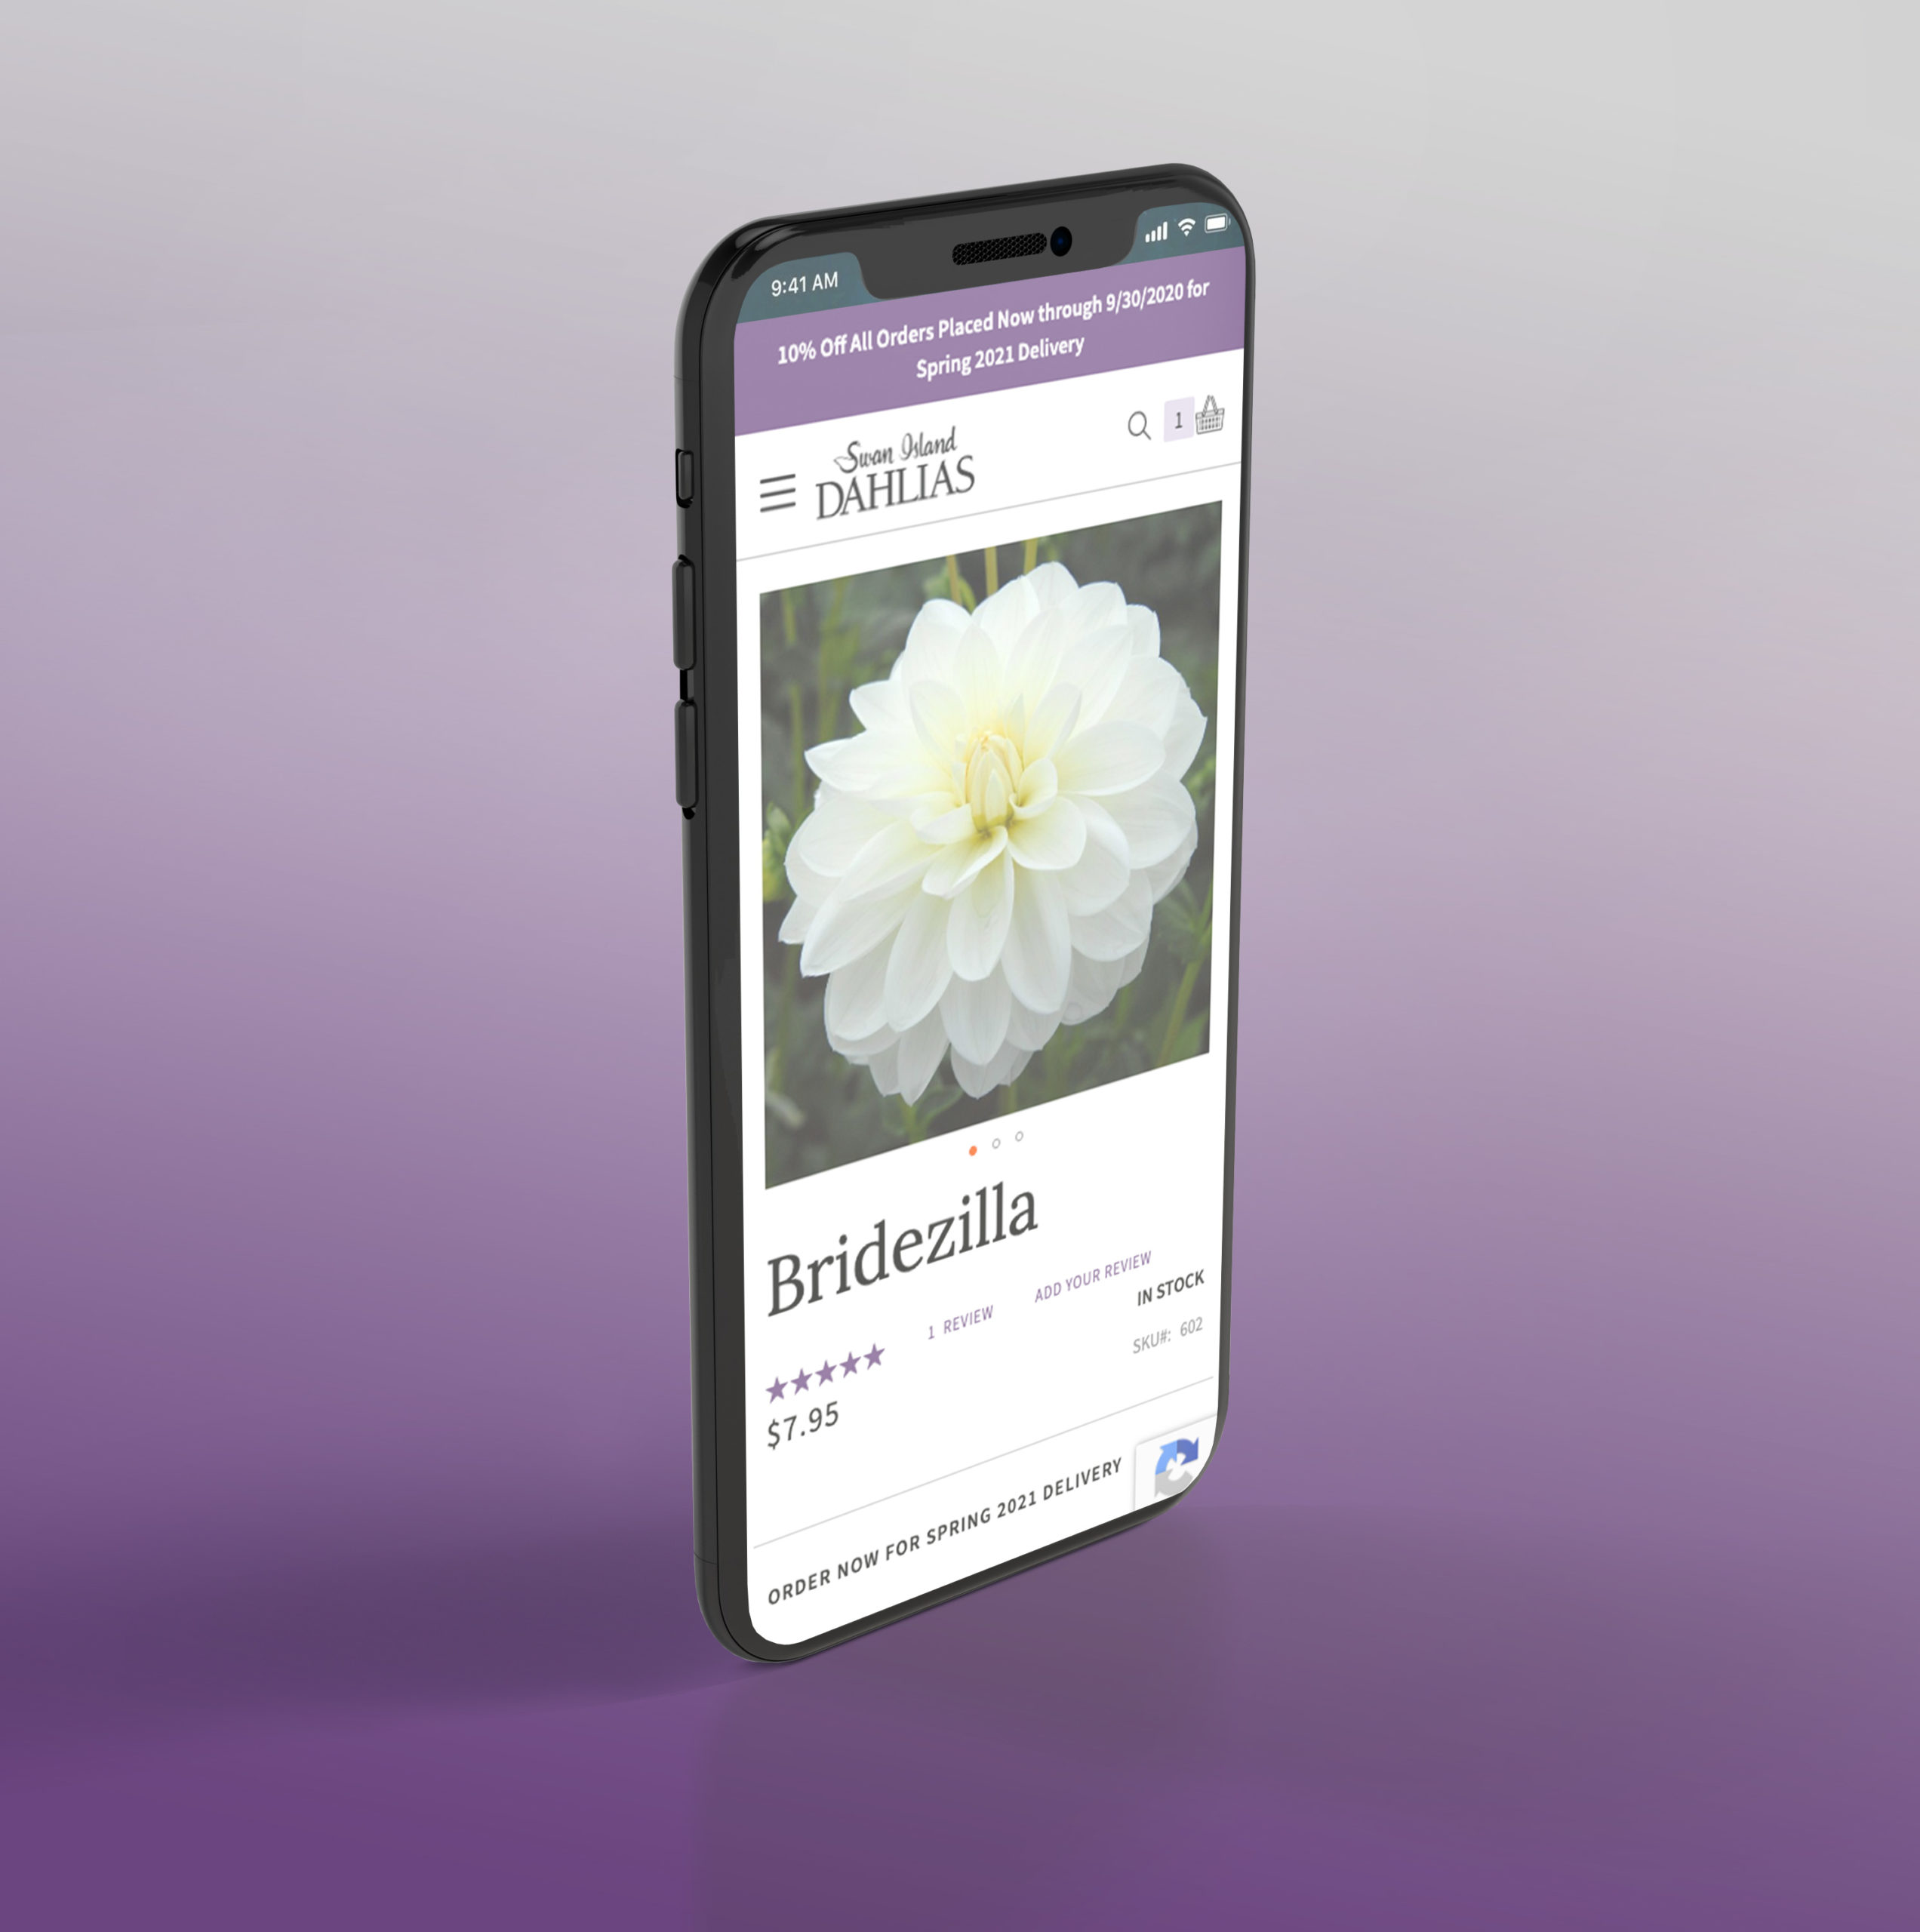 Swan Island Dahlias Bridezilla product page on an iphone